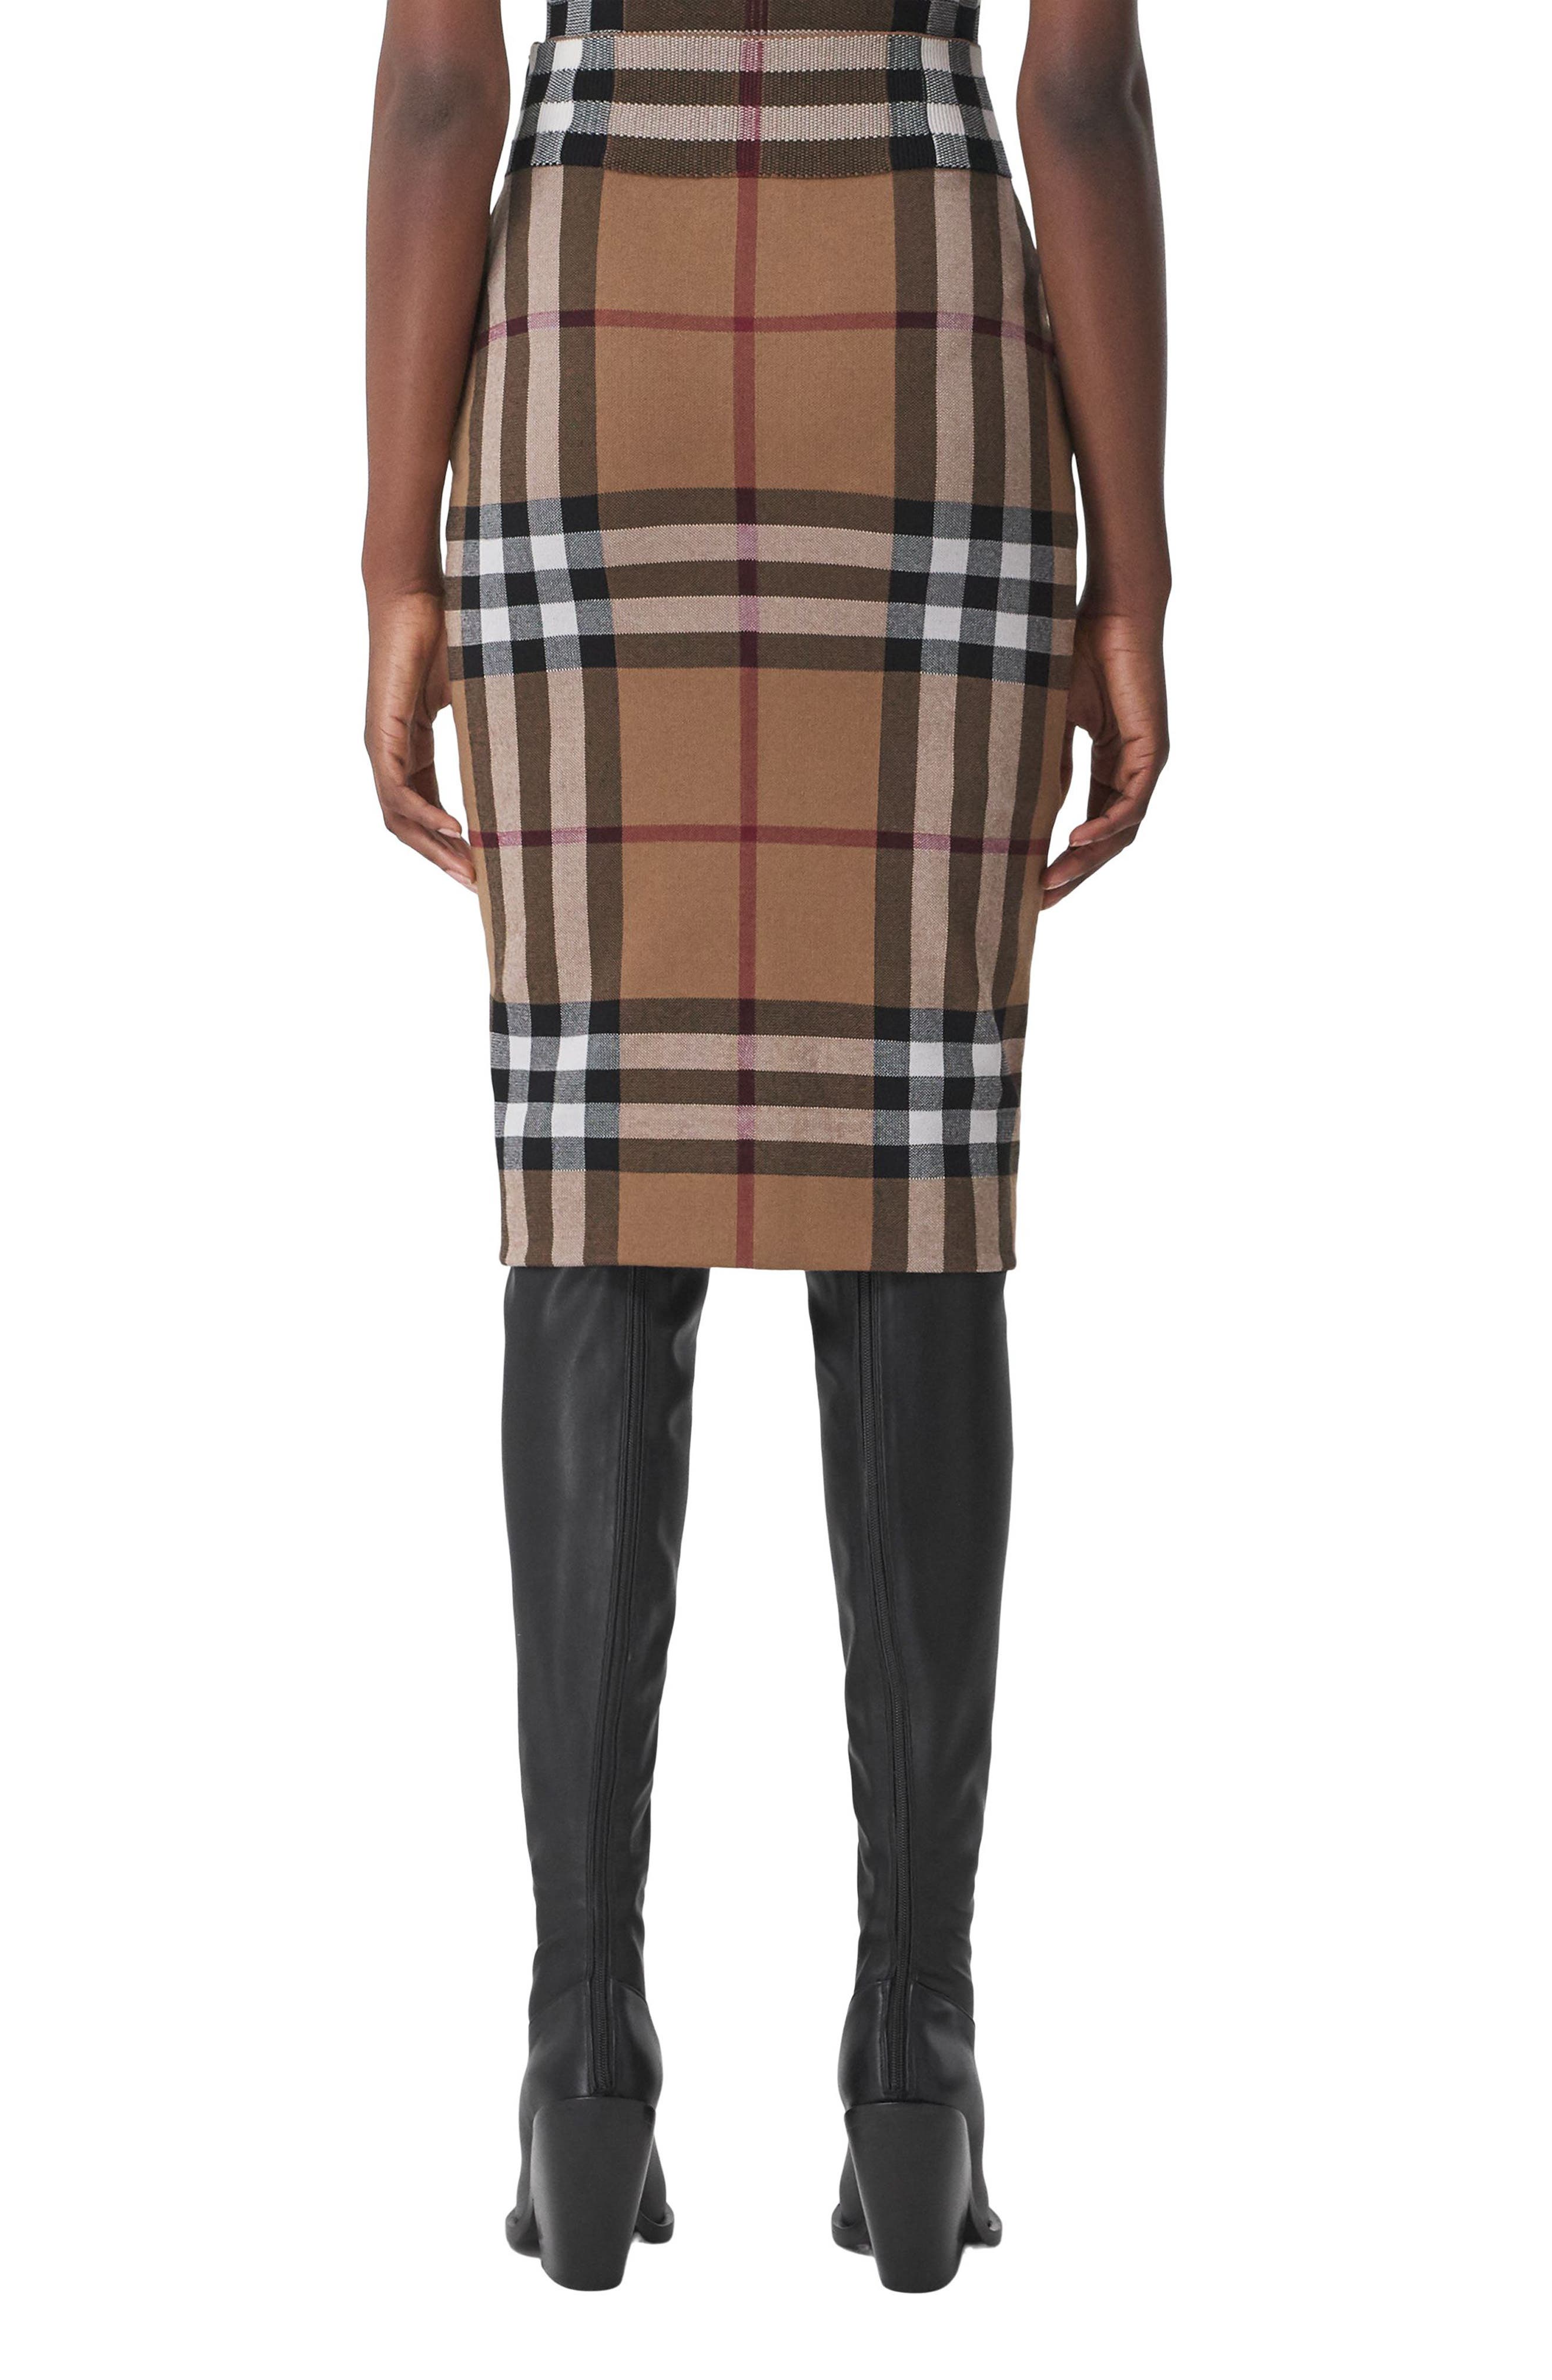 burberry look alike skirt